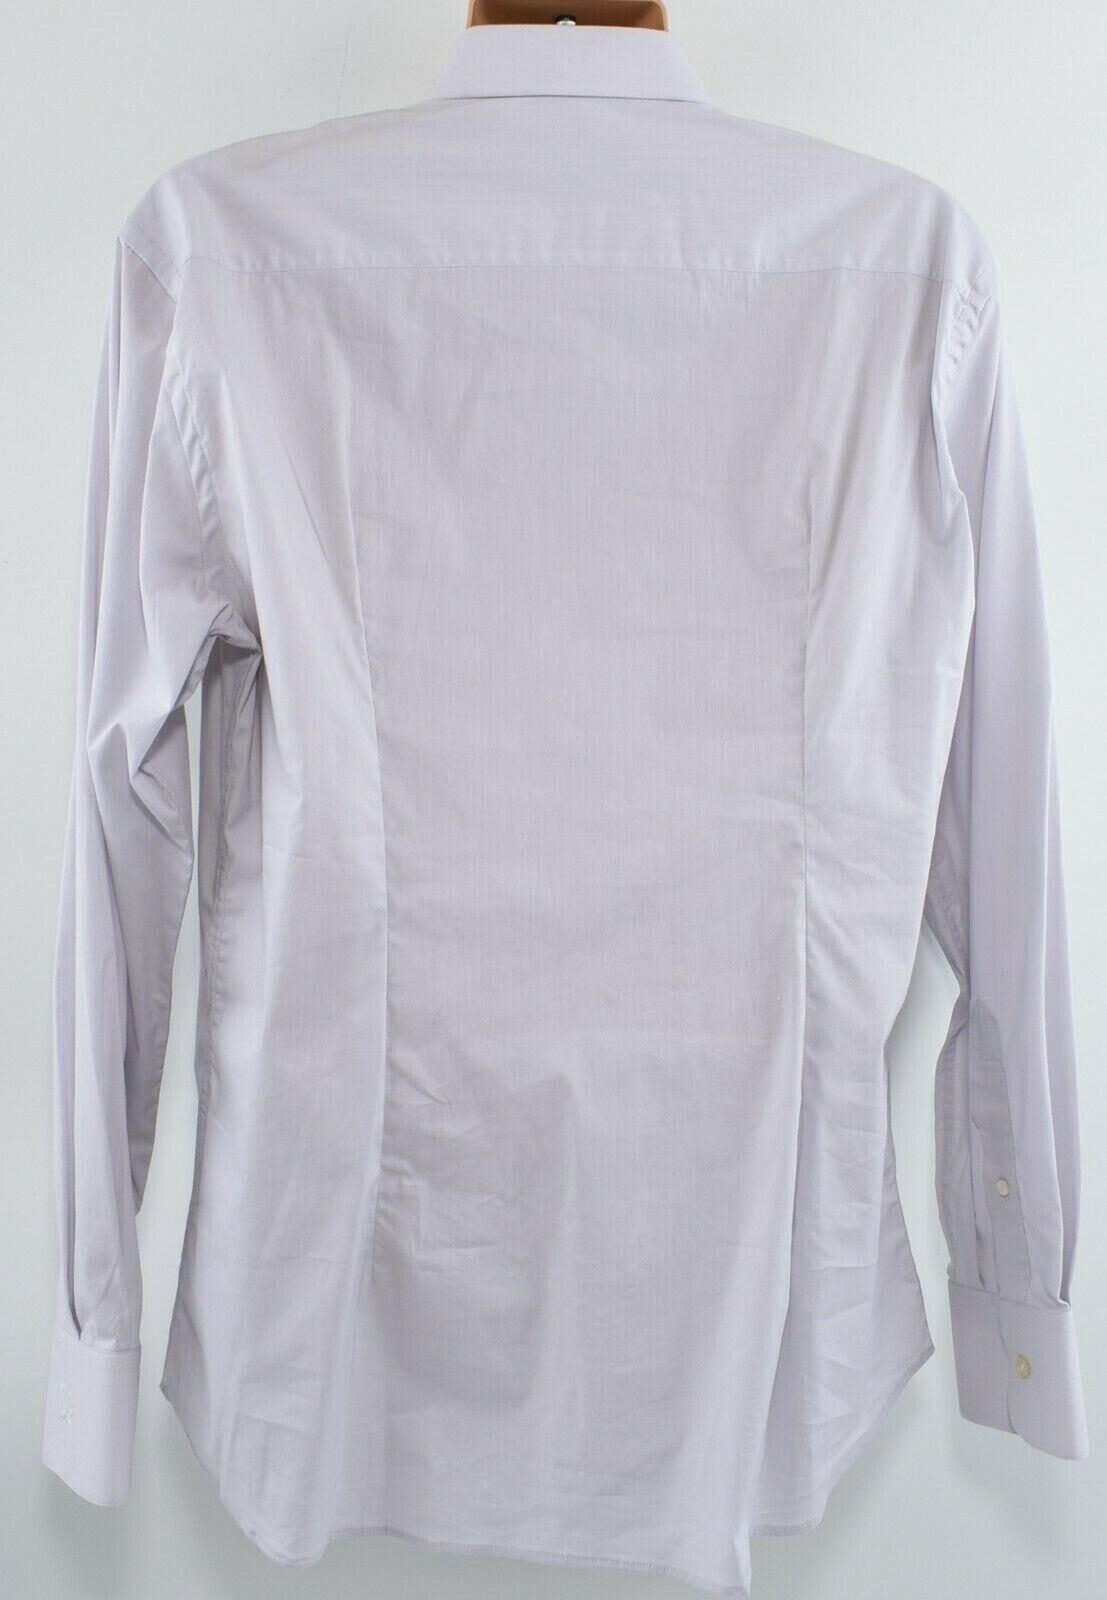 DOLCE & GABBANA Mens Long Sleeve Light Grey Shirt, size collar 17.5"